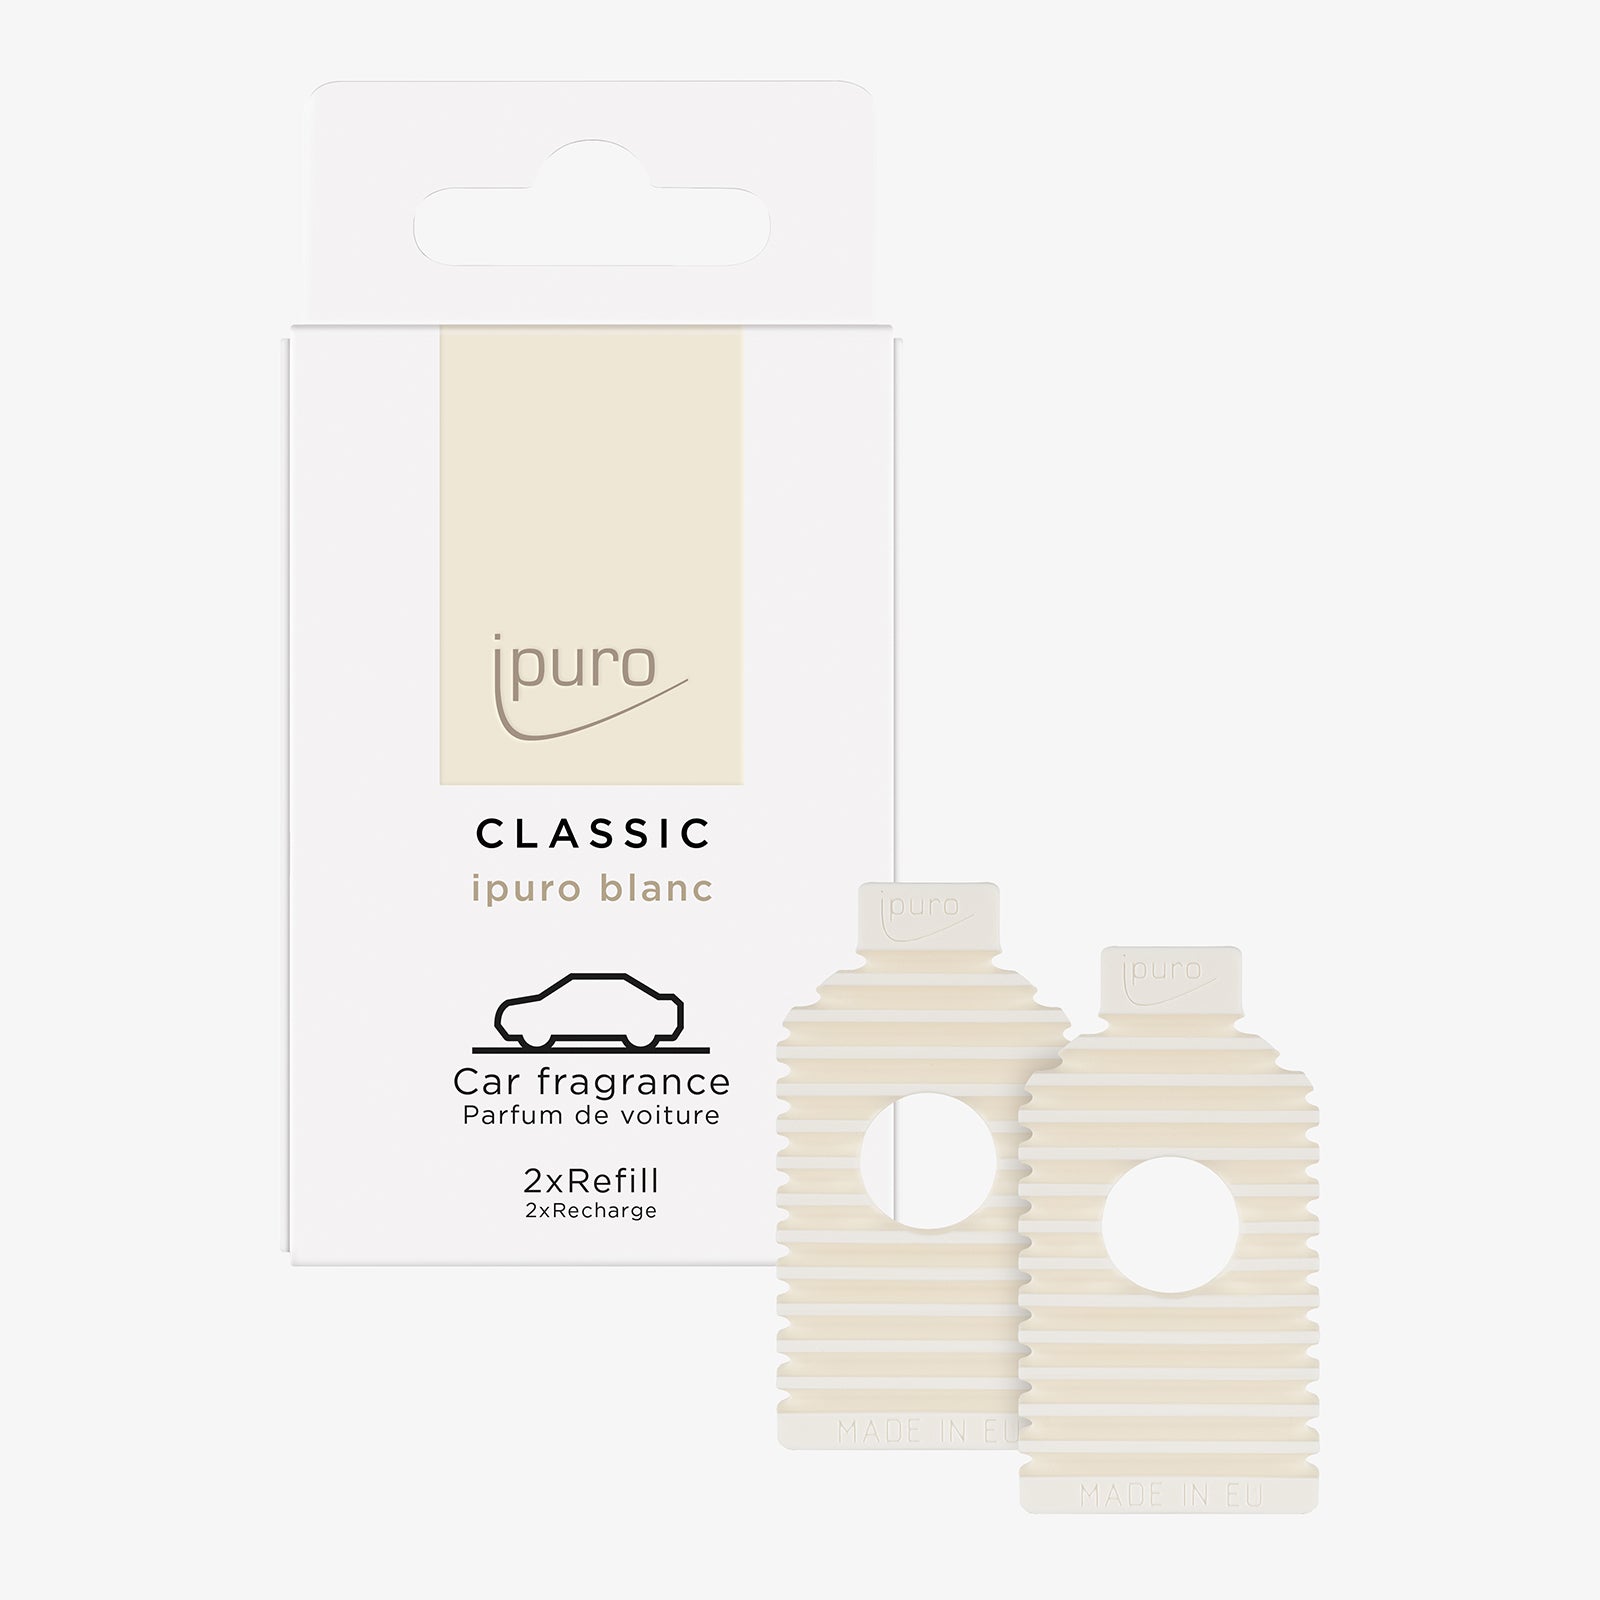 CLASSIC ipuro blanc car fragrance refill essence – IPURO